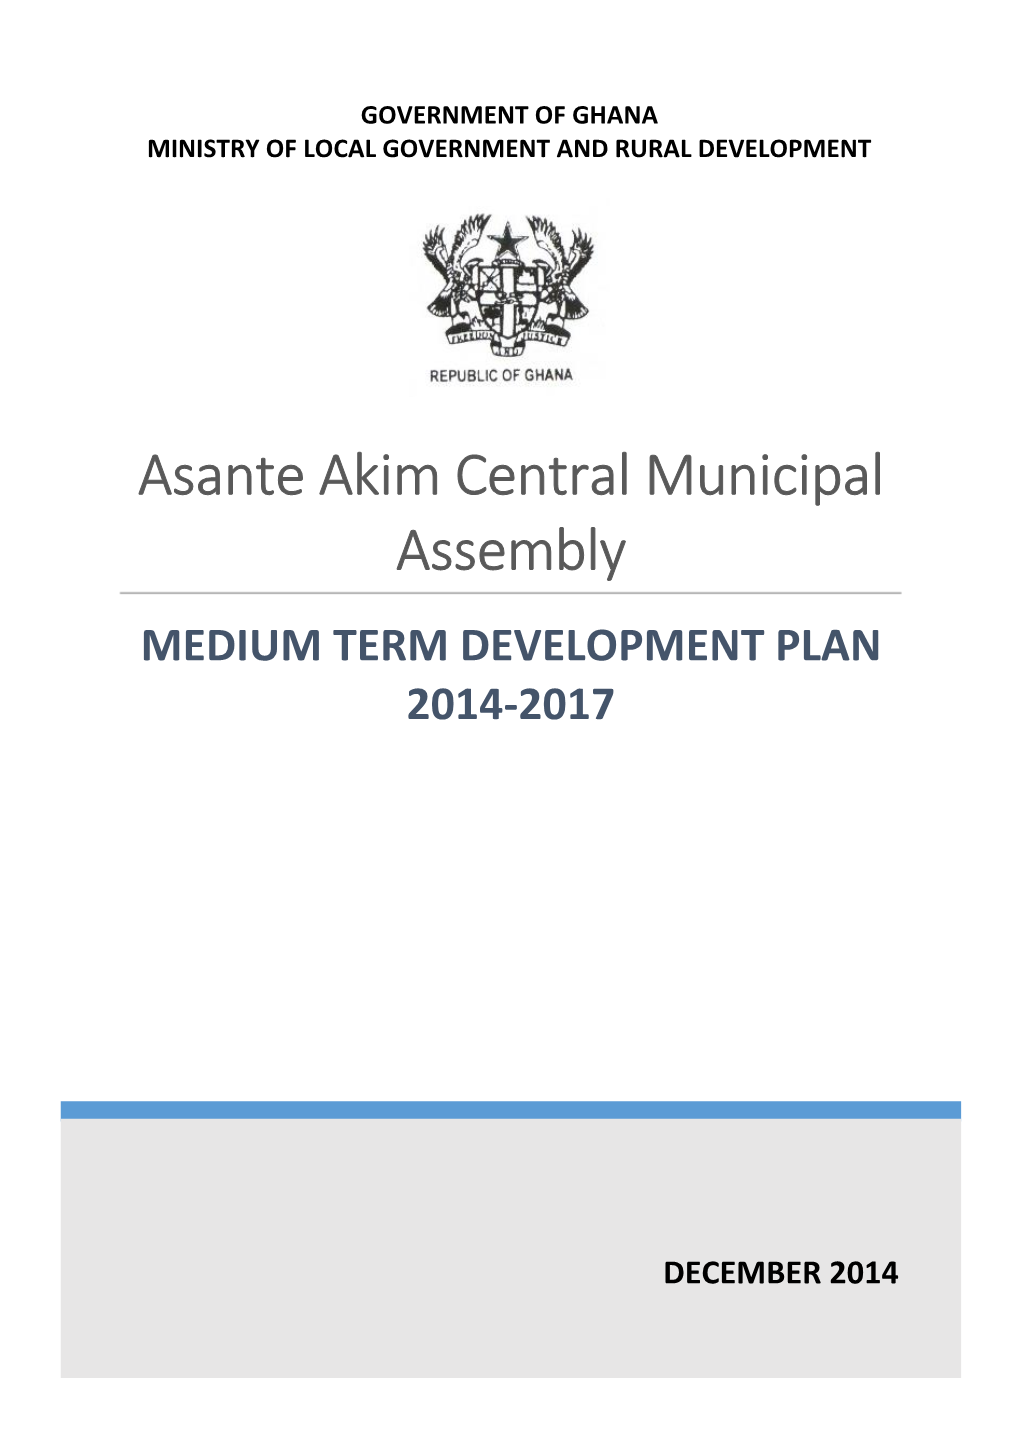 Asante Akim Central Municipal Assembly